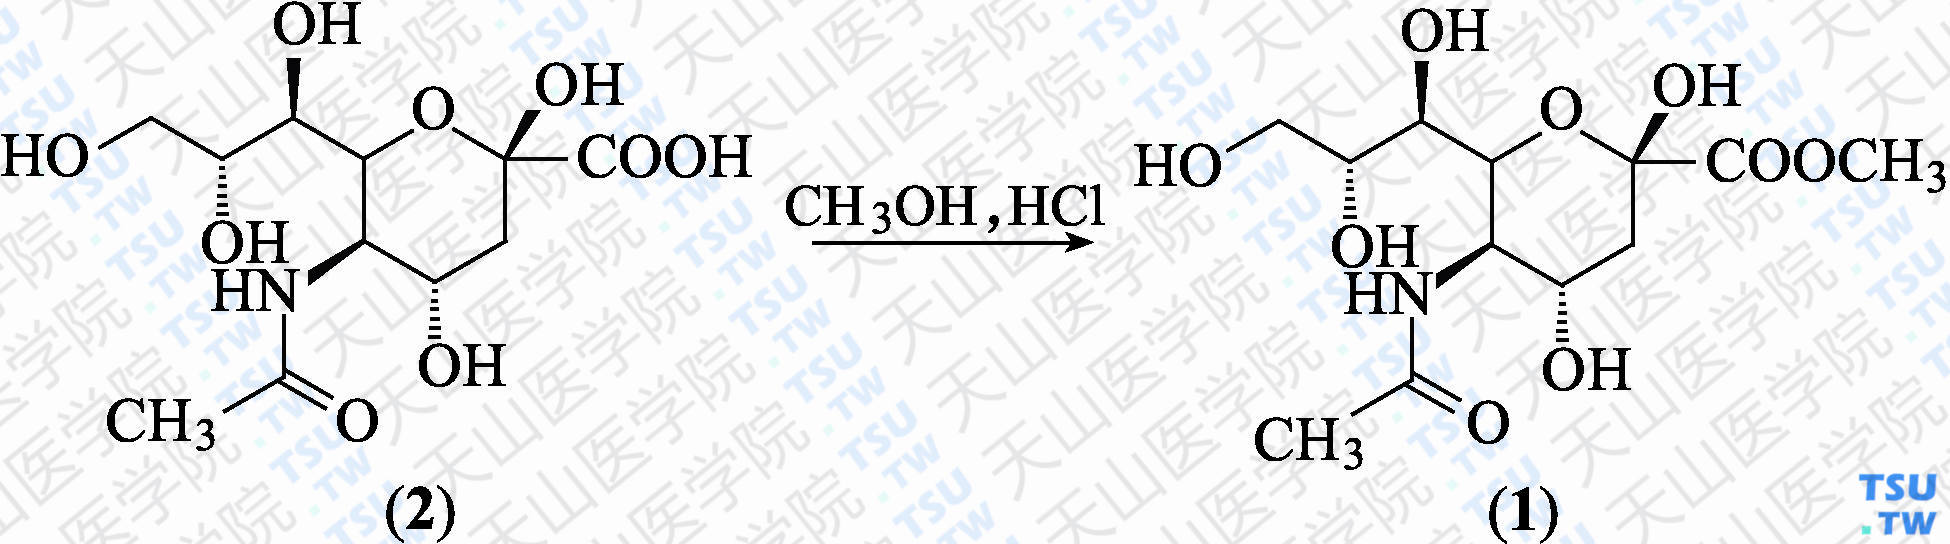 <i>N</i>-乙酰基-D-神经氨酸甲酯（分子式：C<sub>13</sub>H<sub>24</sub>NO<sub>9</sub>）的合成方法路线及其结构式